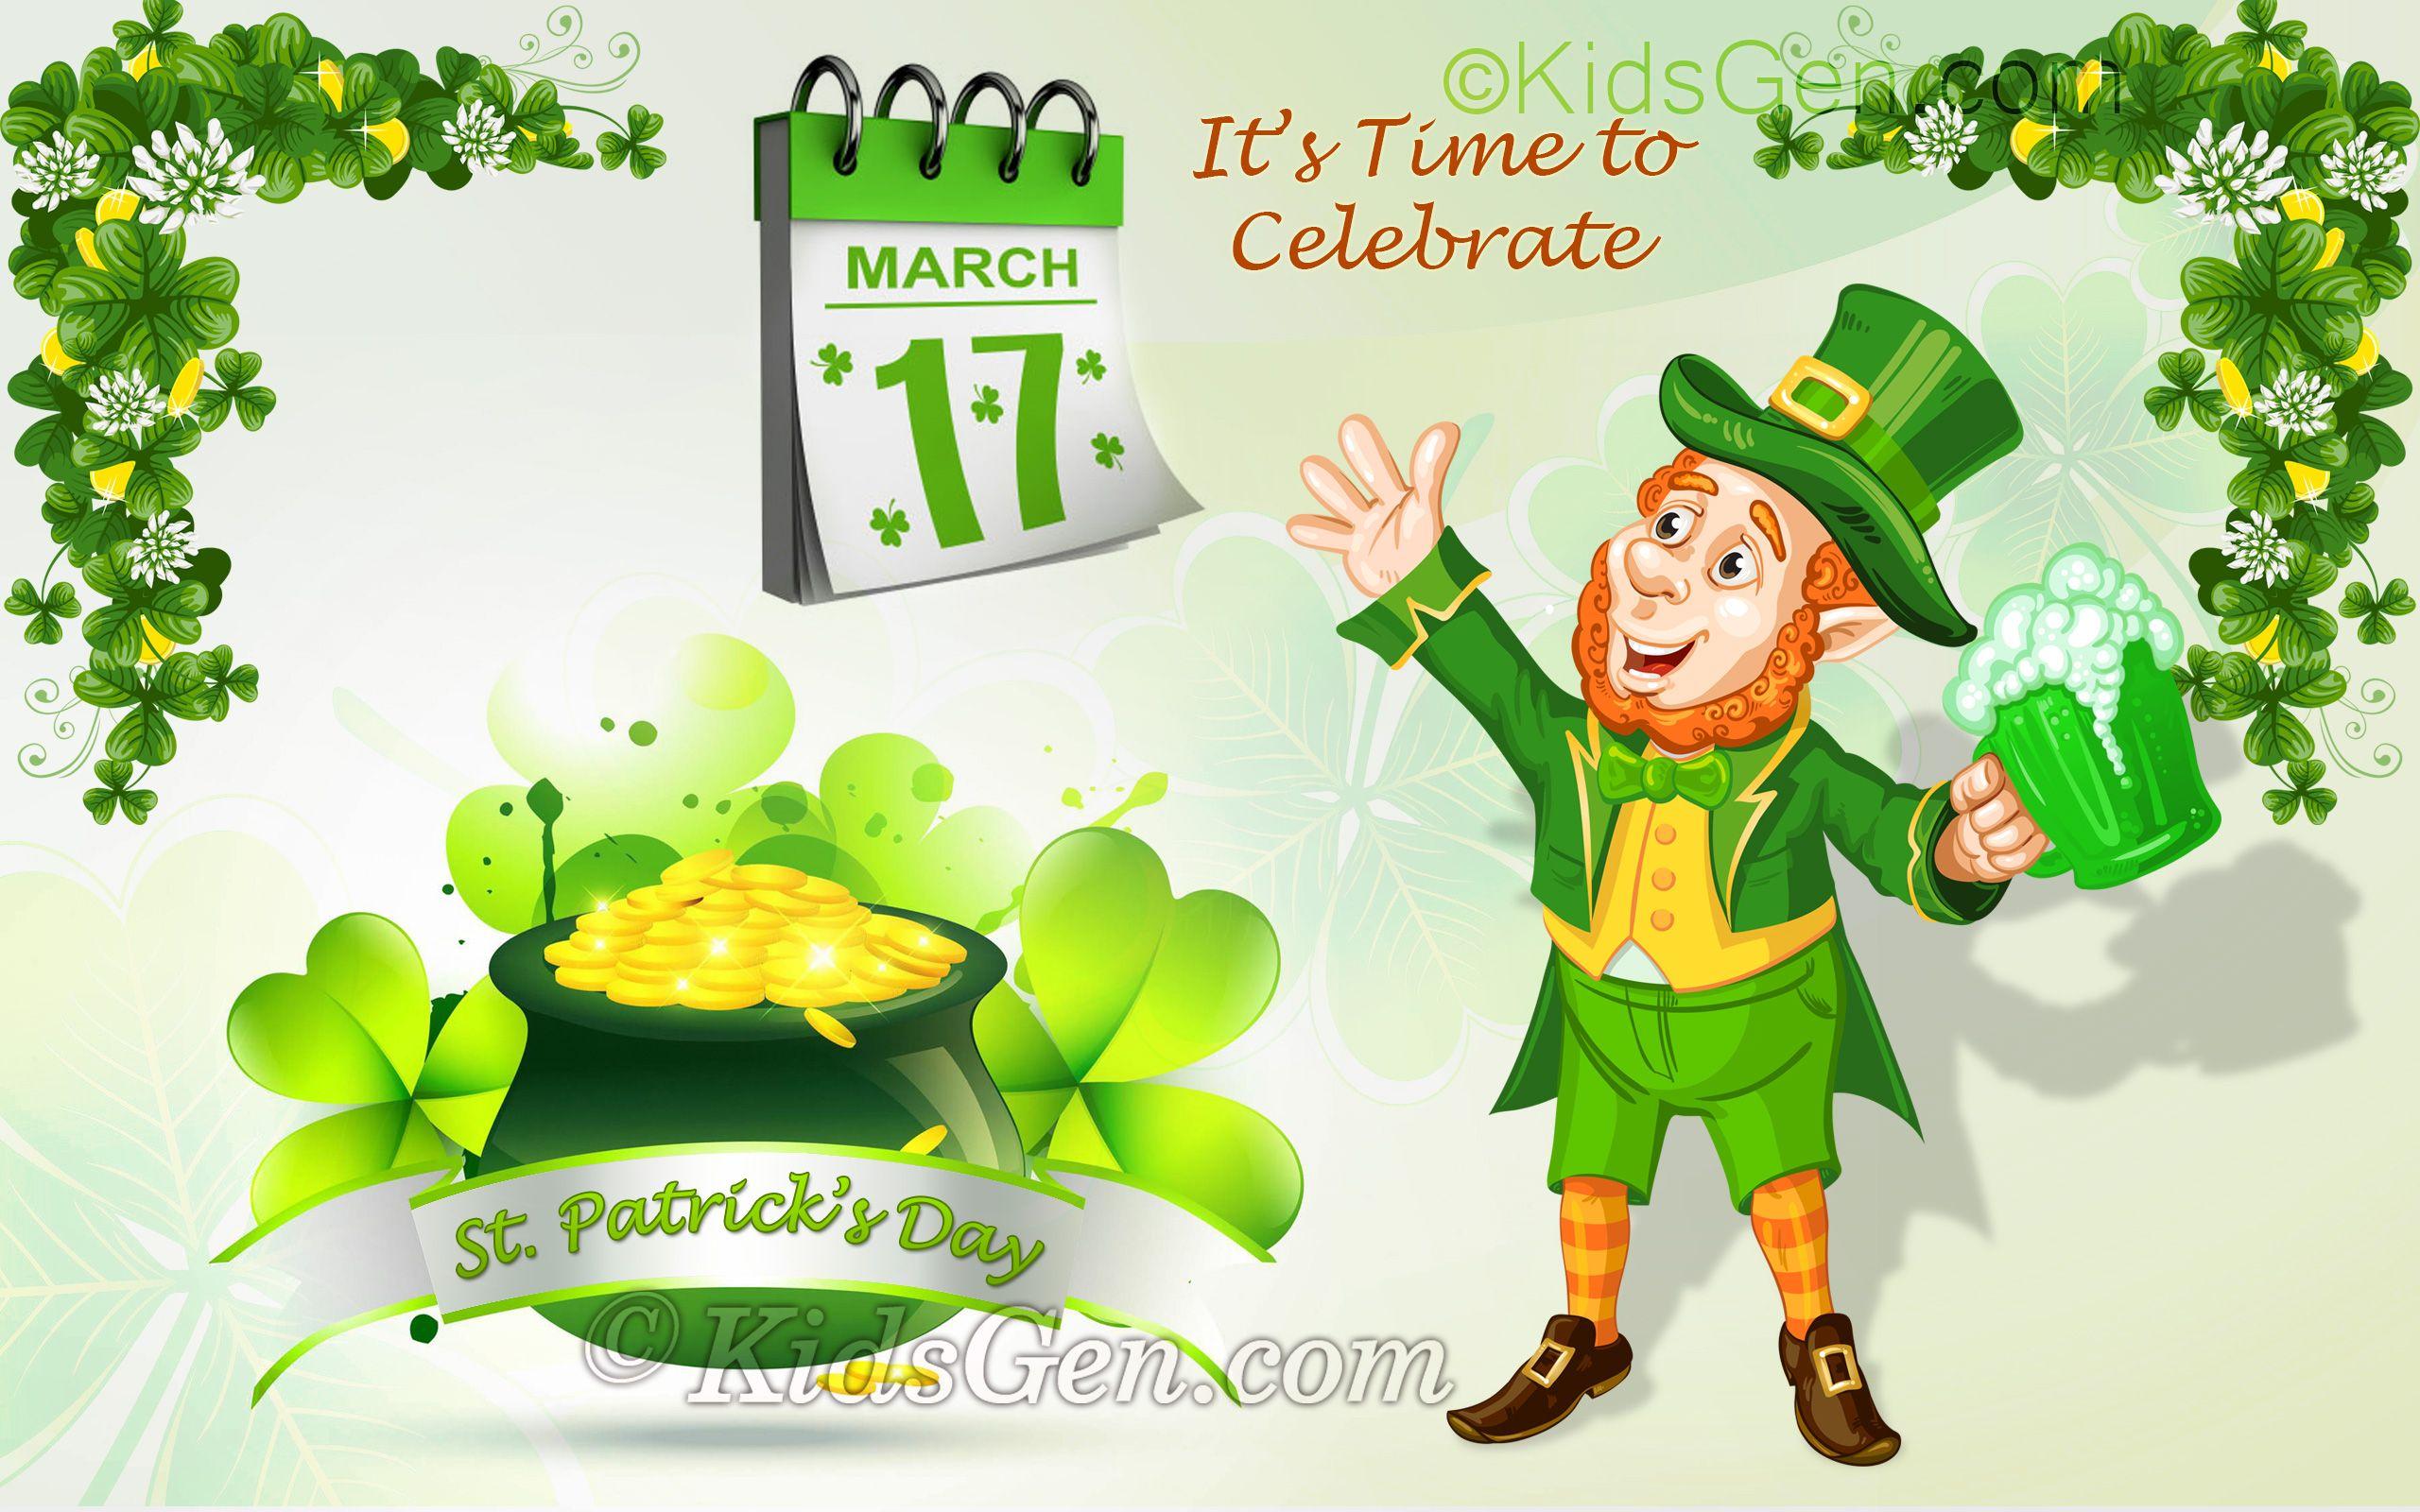 St. Patrick's Day Wallpaper for Widescreen, Desktop, Mobiles